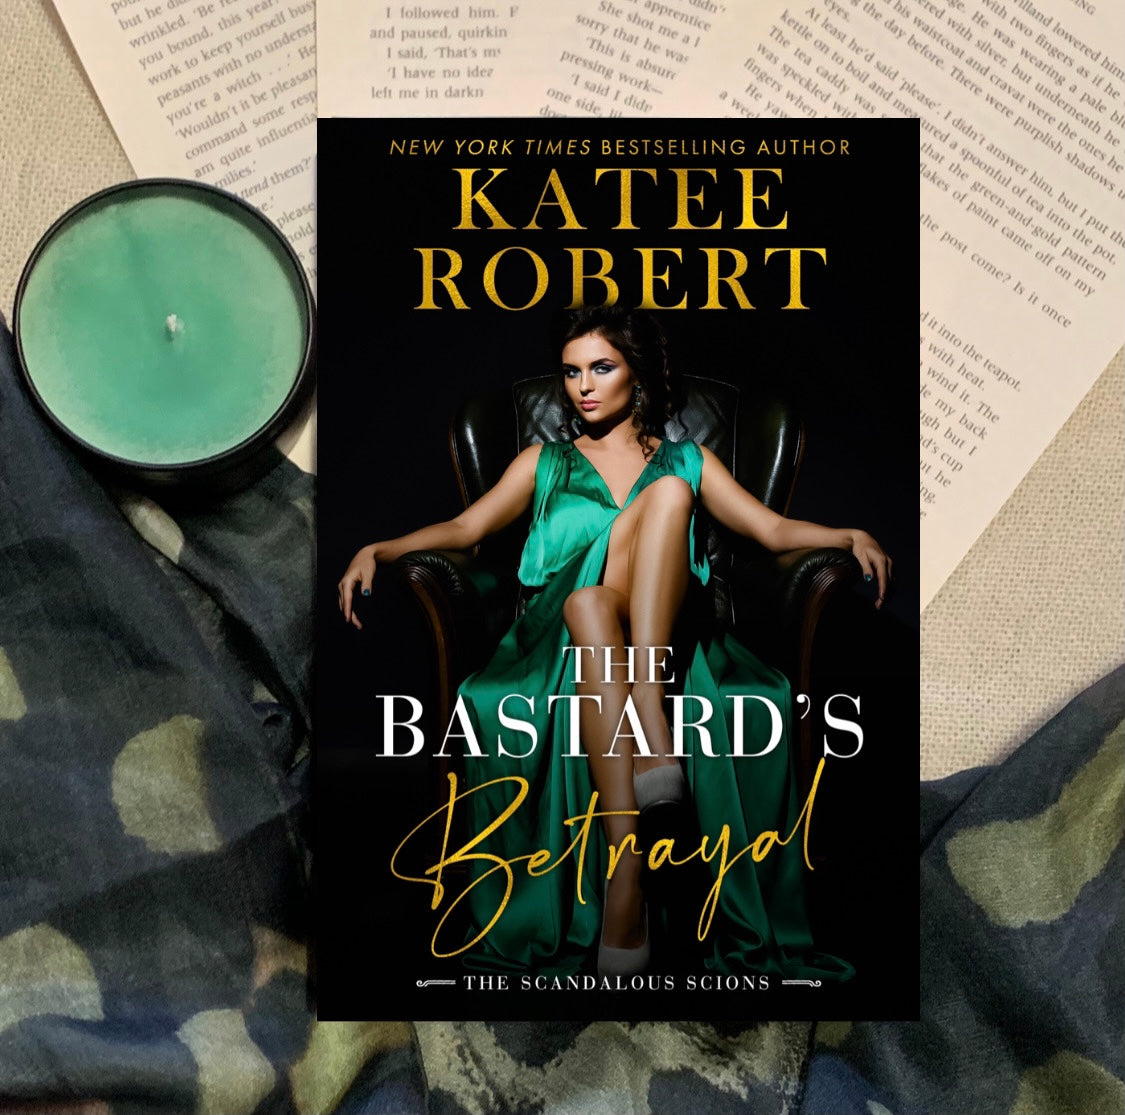 The Bastard’s Betrayal by Katee Robert